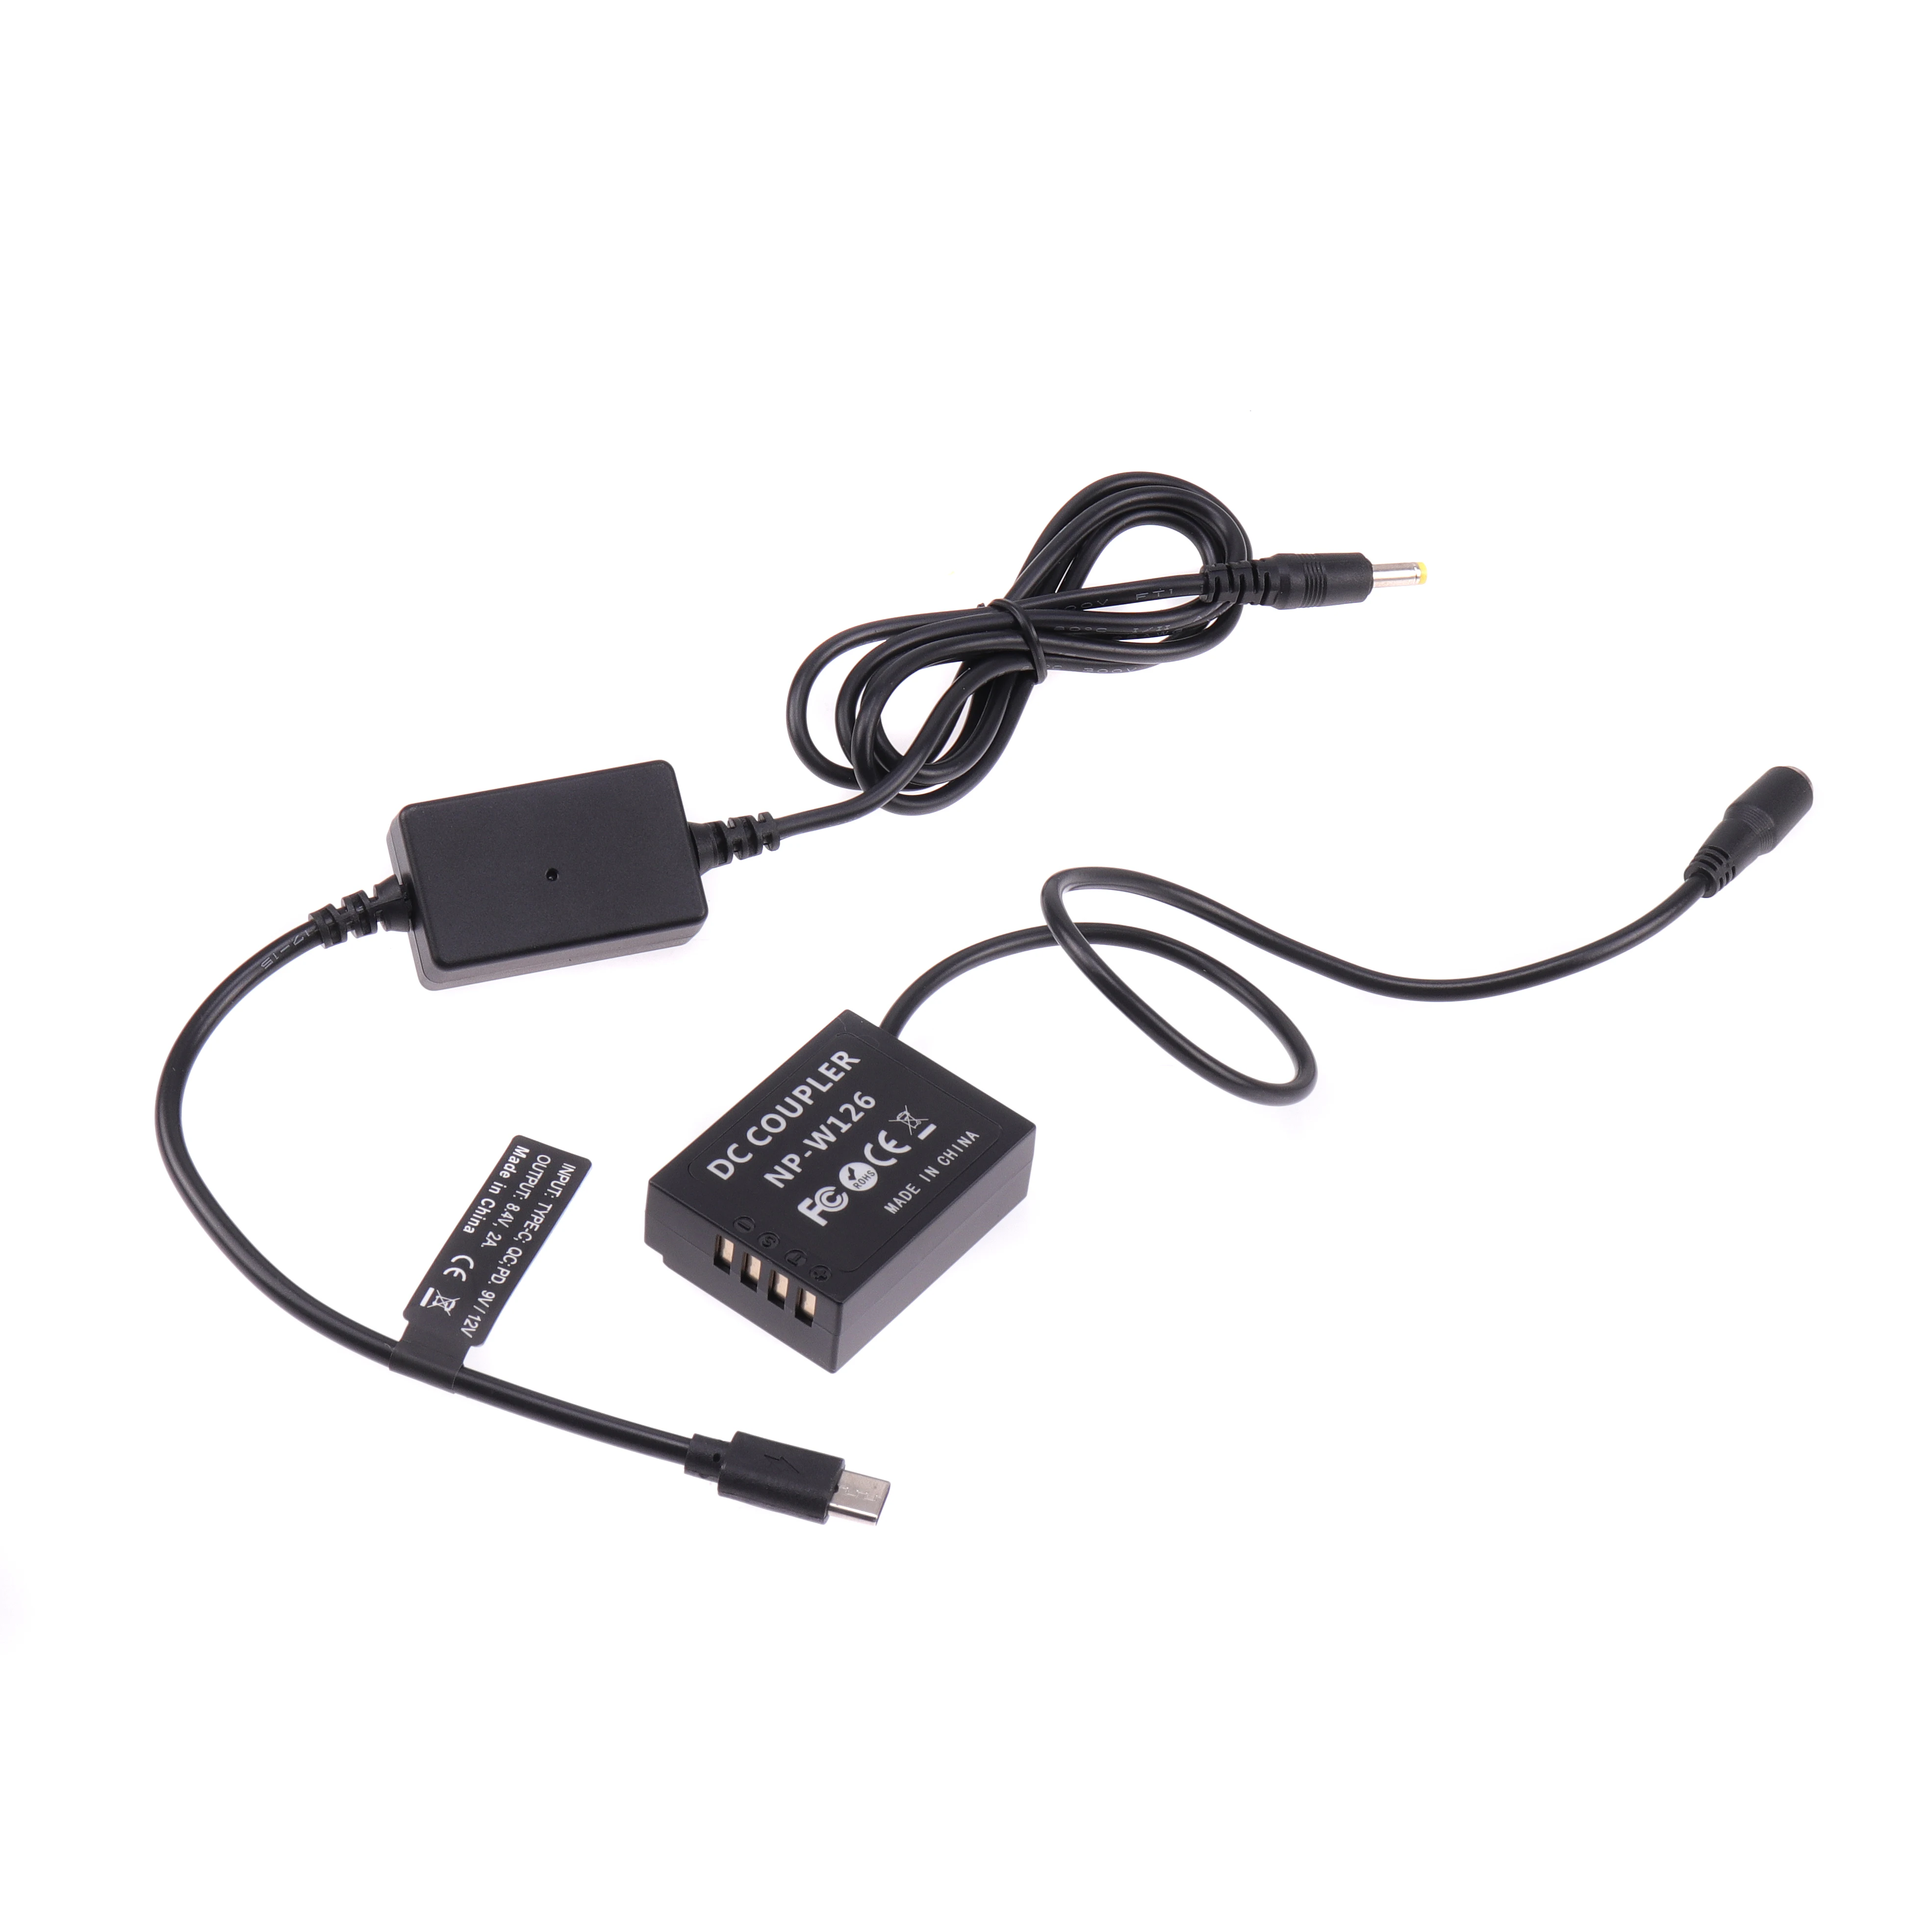 ZITAY Type C USB C to FUJI NP-W126 Dummy Battery Power Cable Cord Wire External Battery Adapter Converter Compatible for Fujifilm X100F XT3 XT2 XT1 XT30 XT20 XT10 XT100 XA5 XE3 X-H1 X-Pro2 Cameras etc 